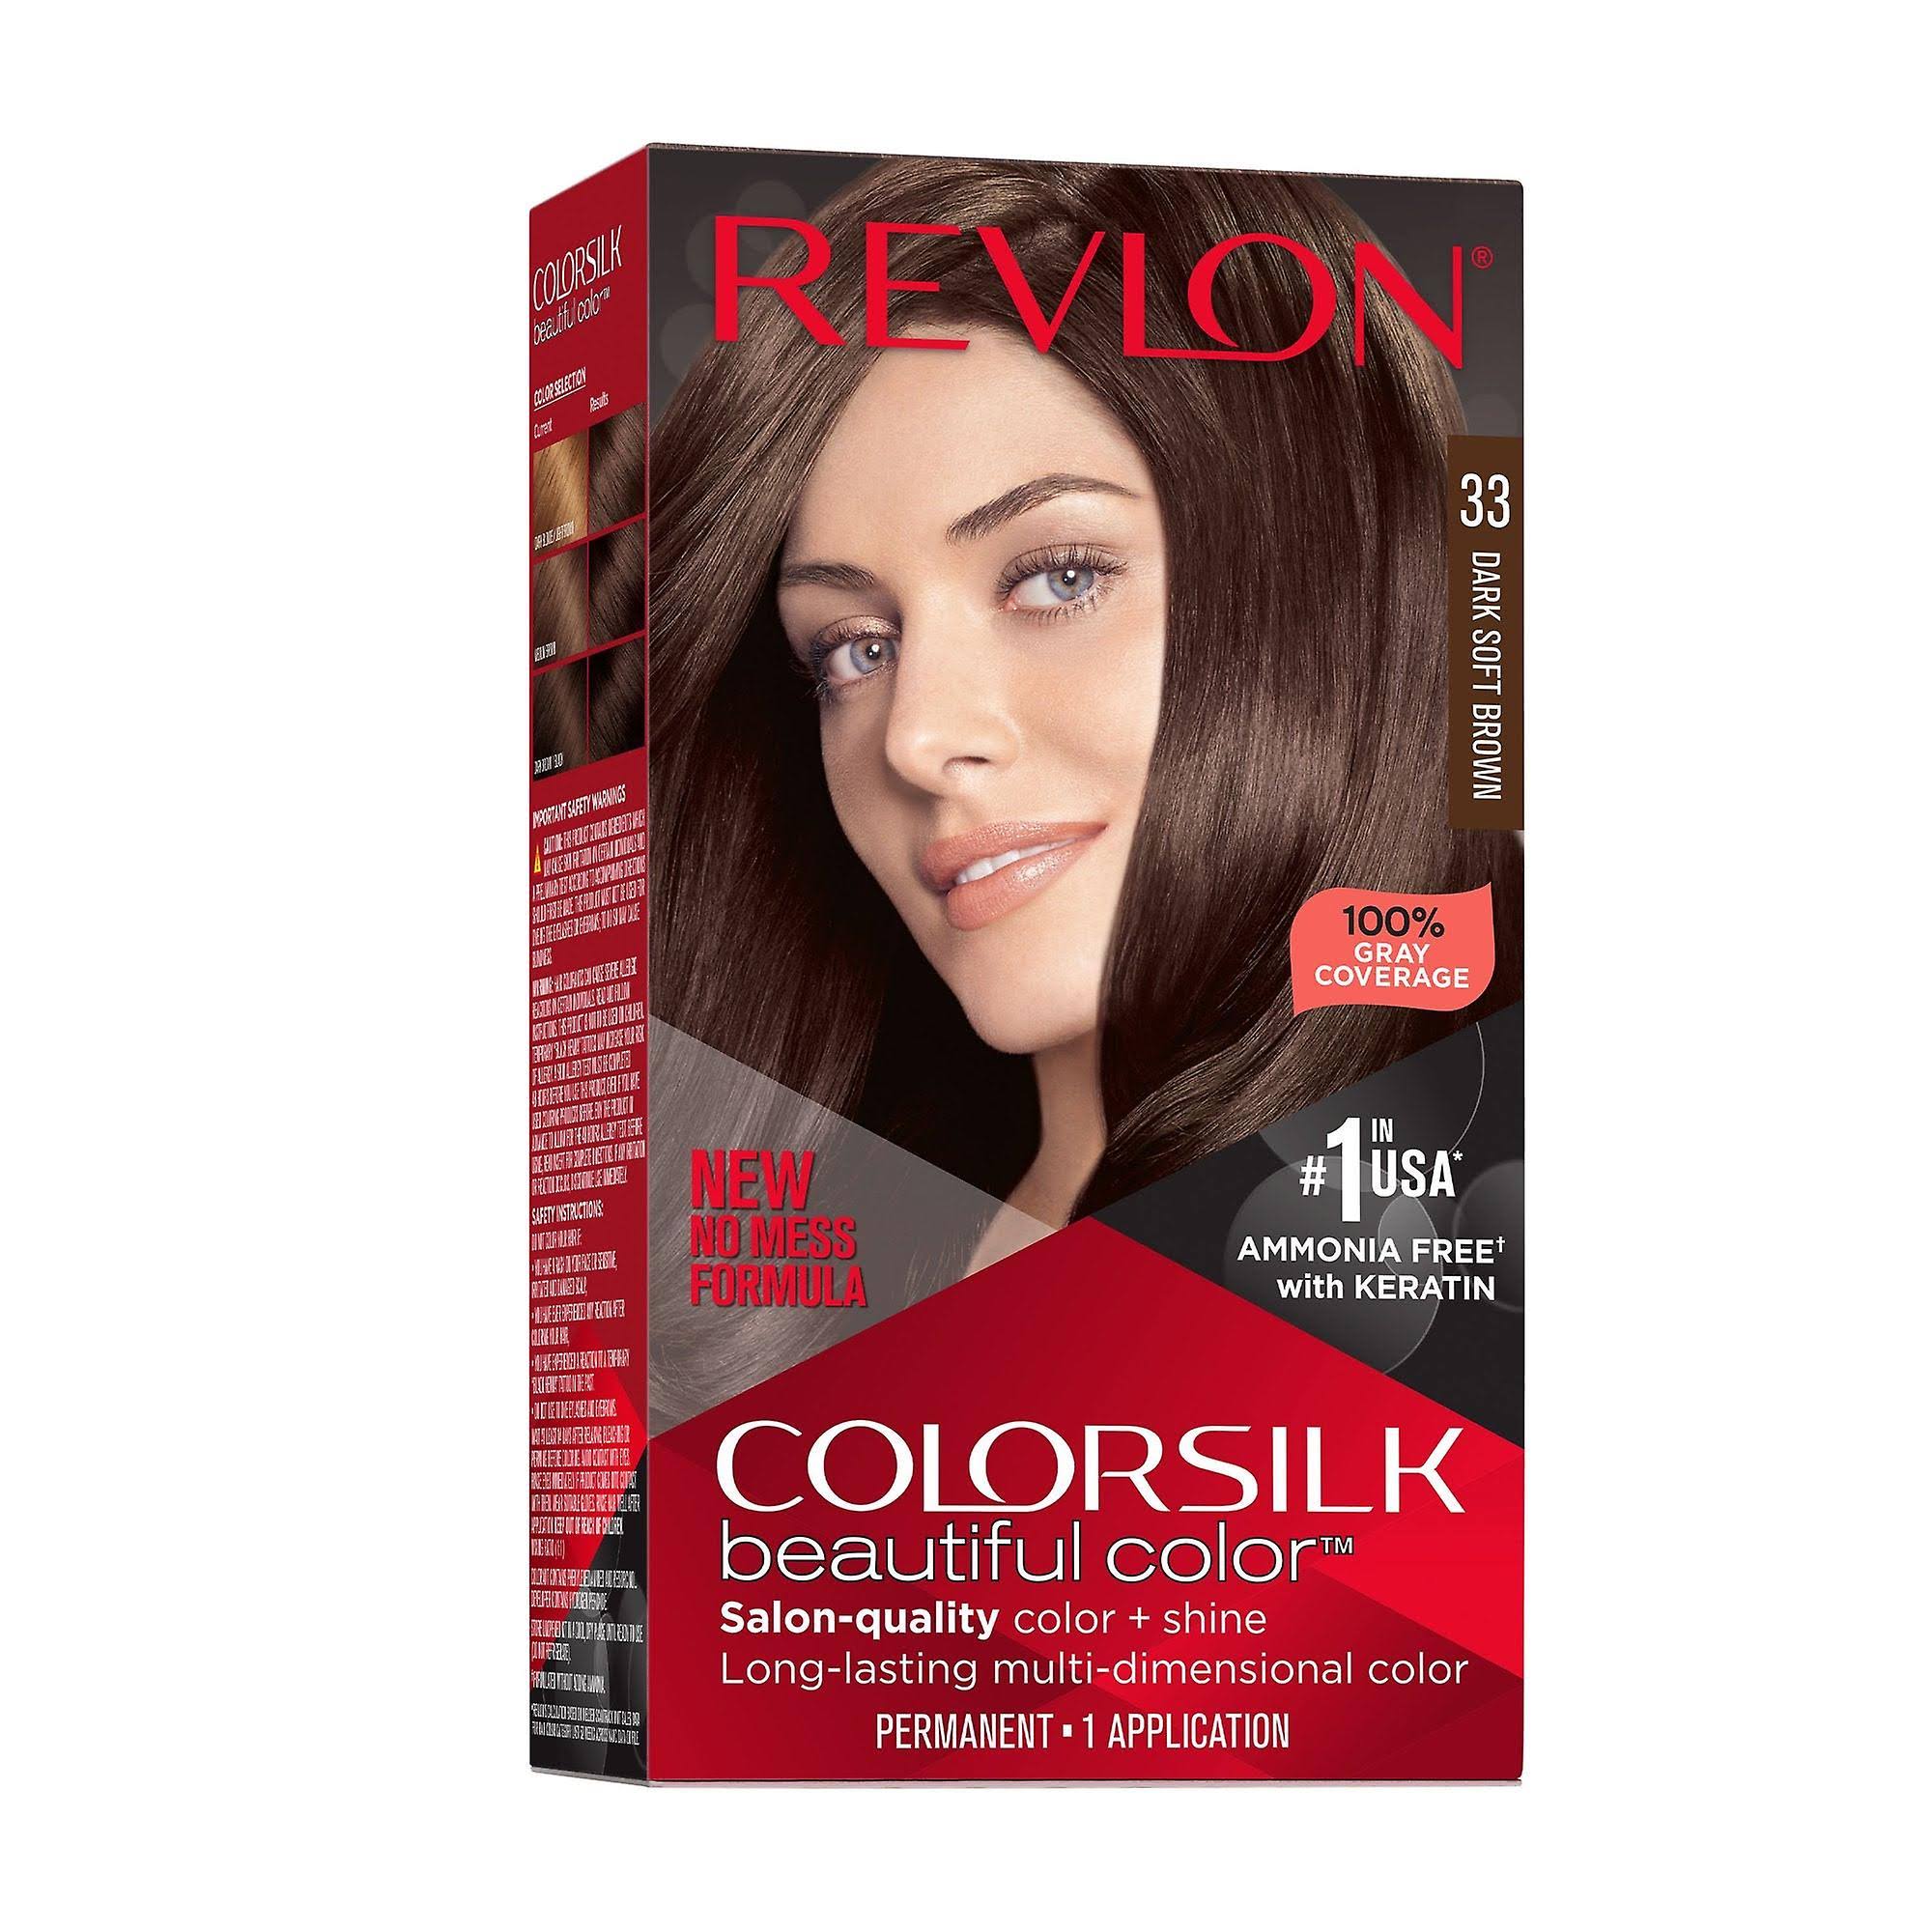 Revlon New colorsilk beautiful permanent Hair color, no mess formula, 33 dark soft brown, 1 pack